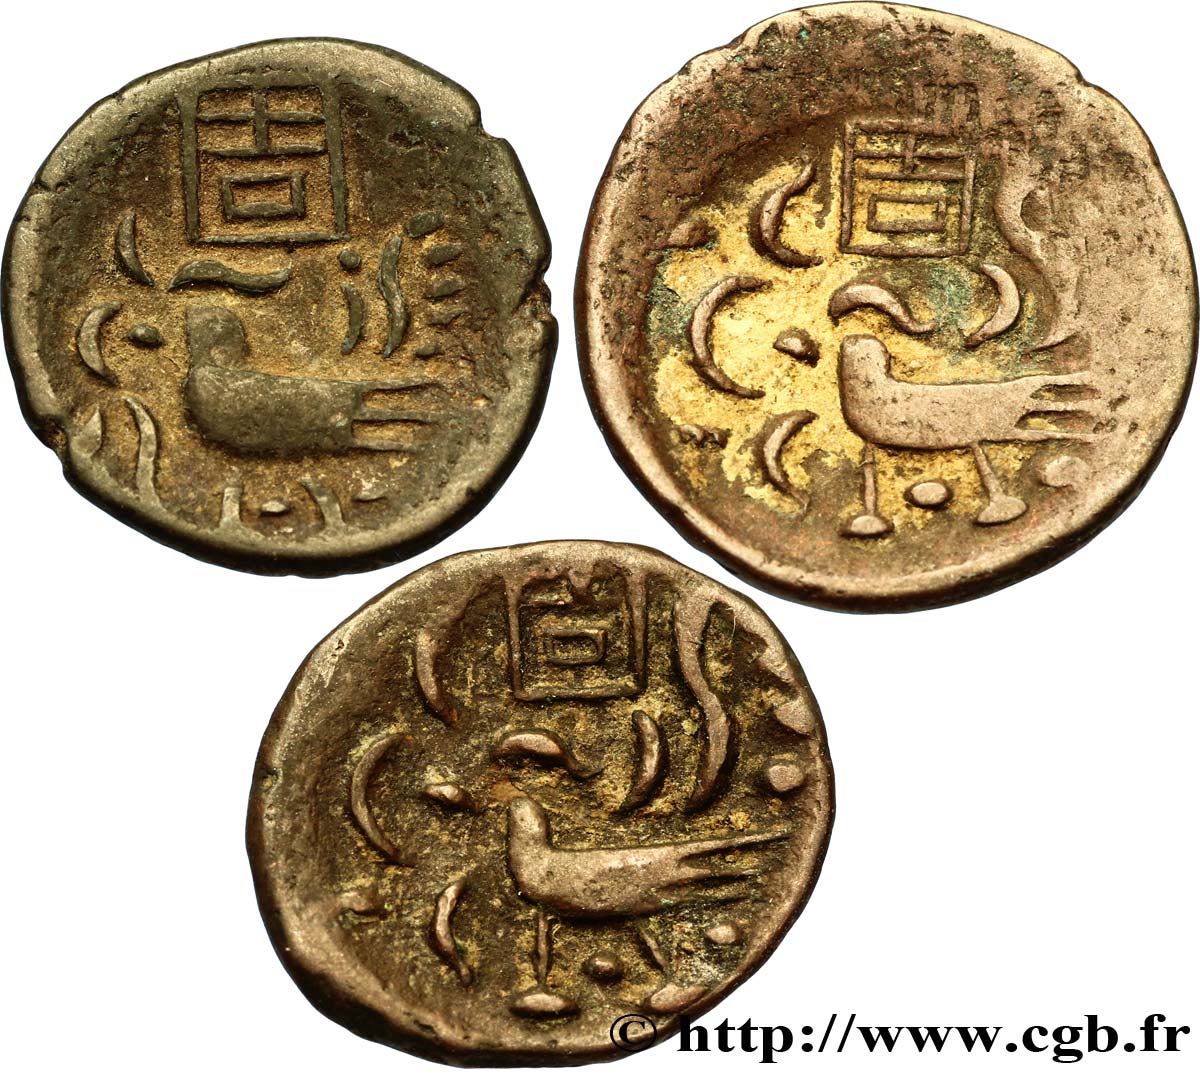 CAMBOGIA Lot de 3 monnaies de 2 Pe - Royaume du Cambodge Ang Duaong n.d  MB 